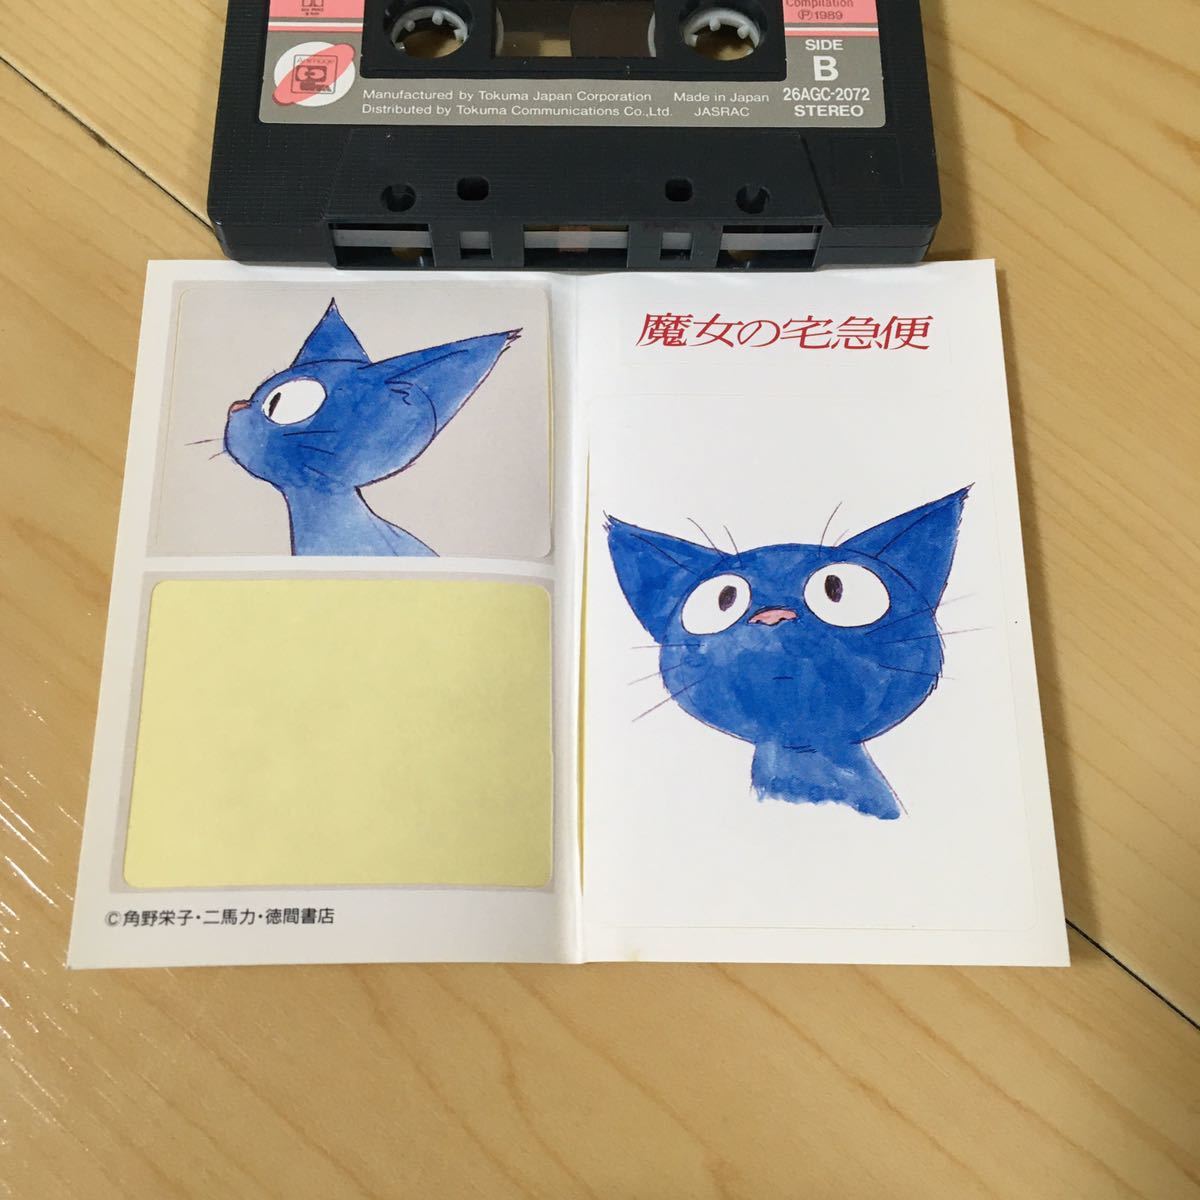  cassette tape Majo no Takkyubin high Tec series that time thing Showa Retro rare Ghibli Showa Retro soundtrack Animage soundtrack 